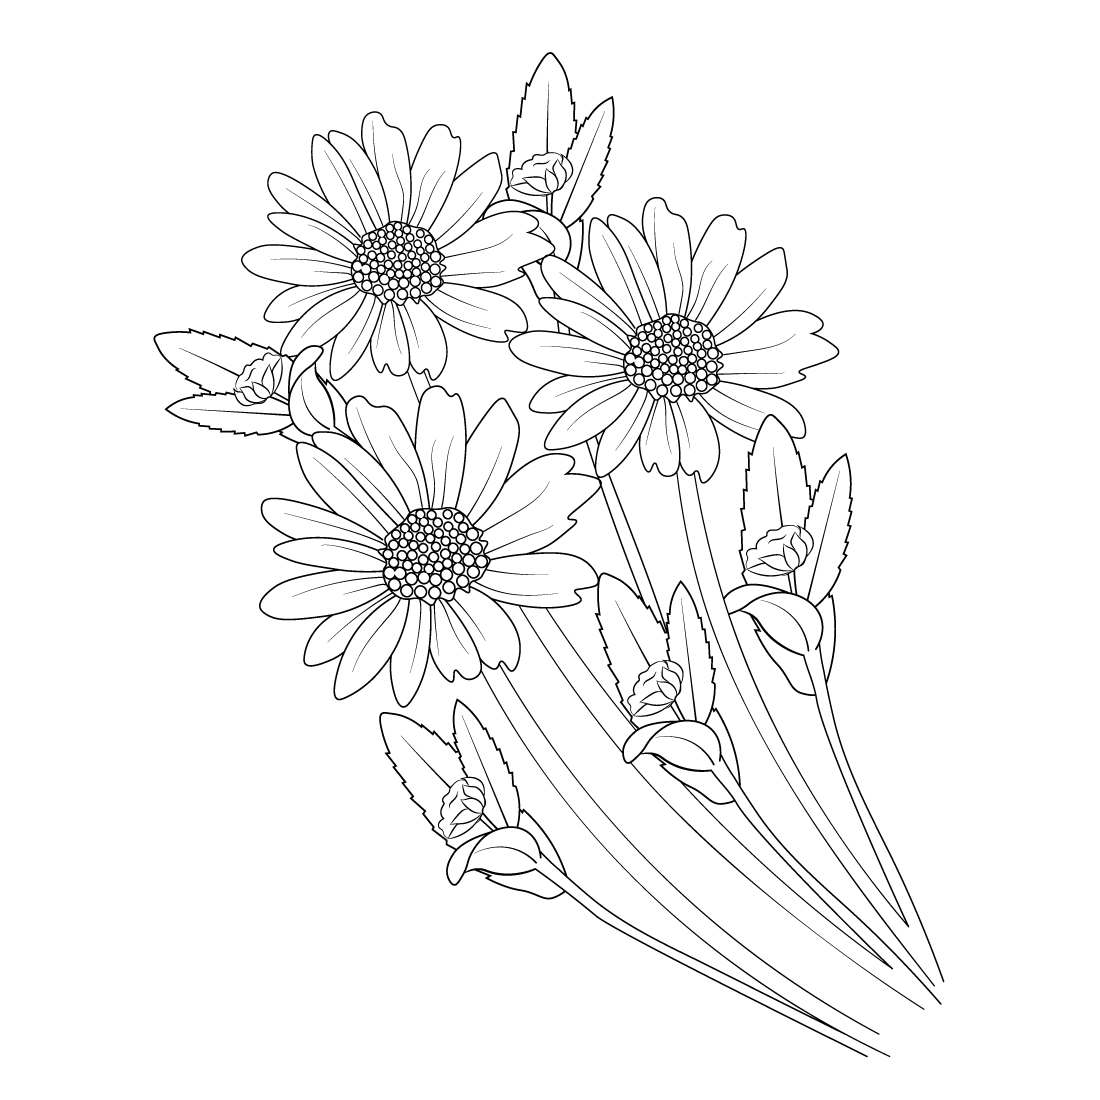 Futuristic illustration of daisy flower t shirt design, vector